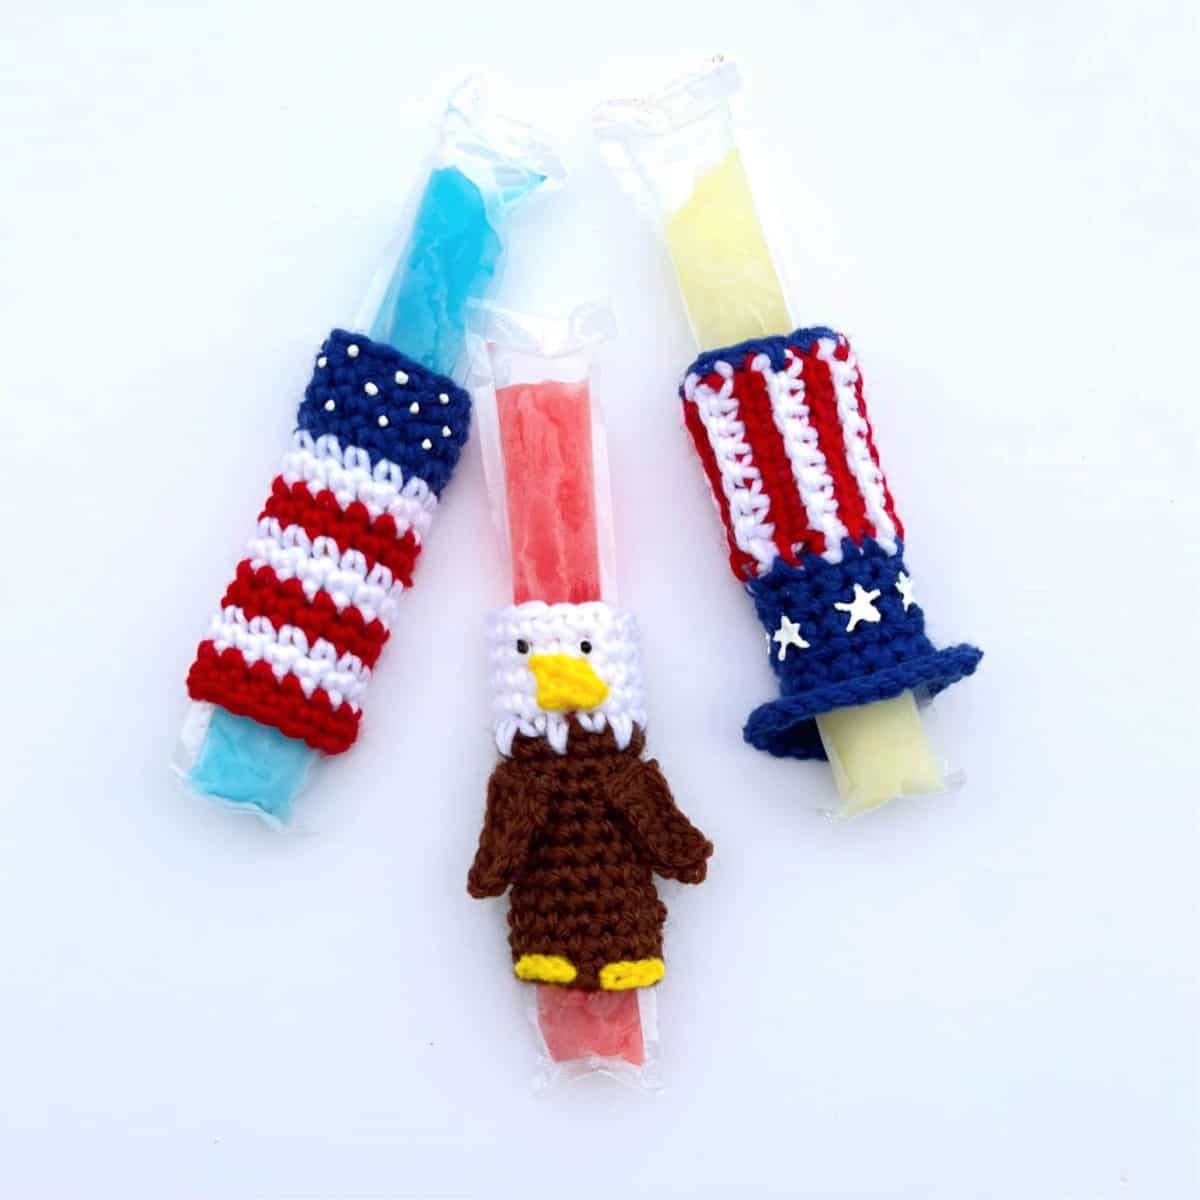 Americana themed crochet popsicle holders